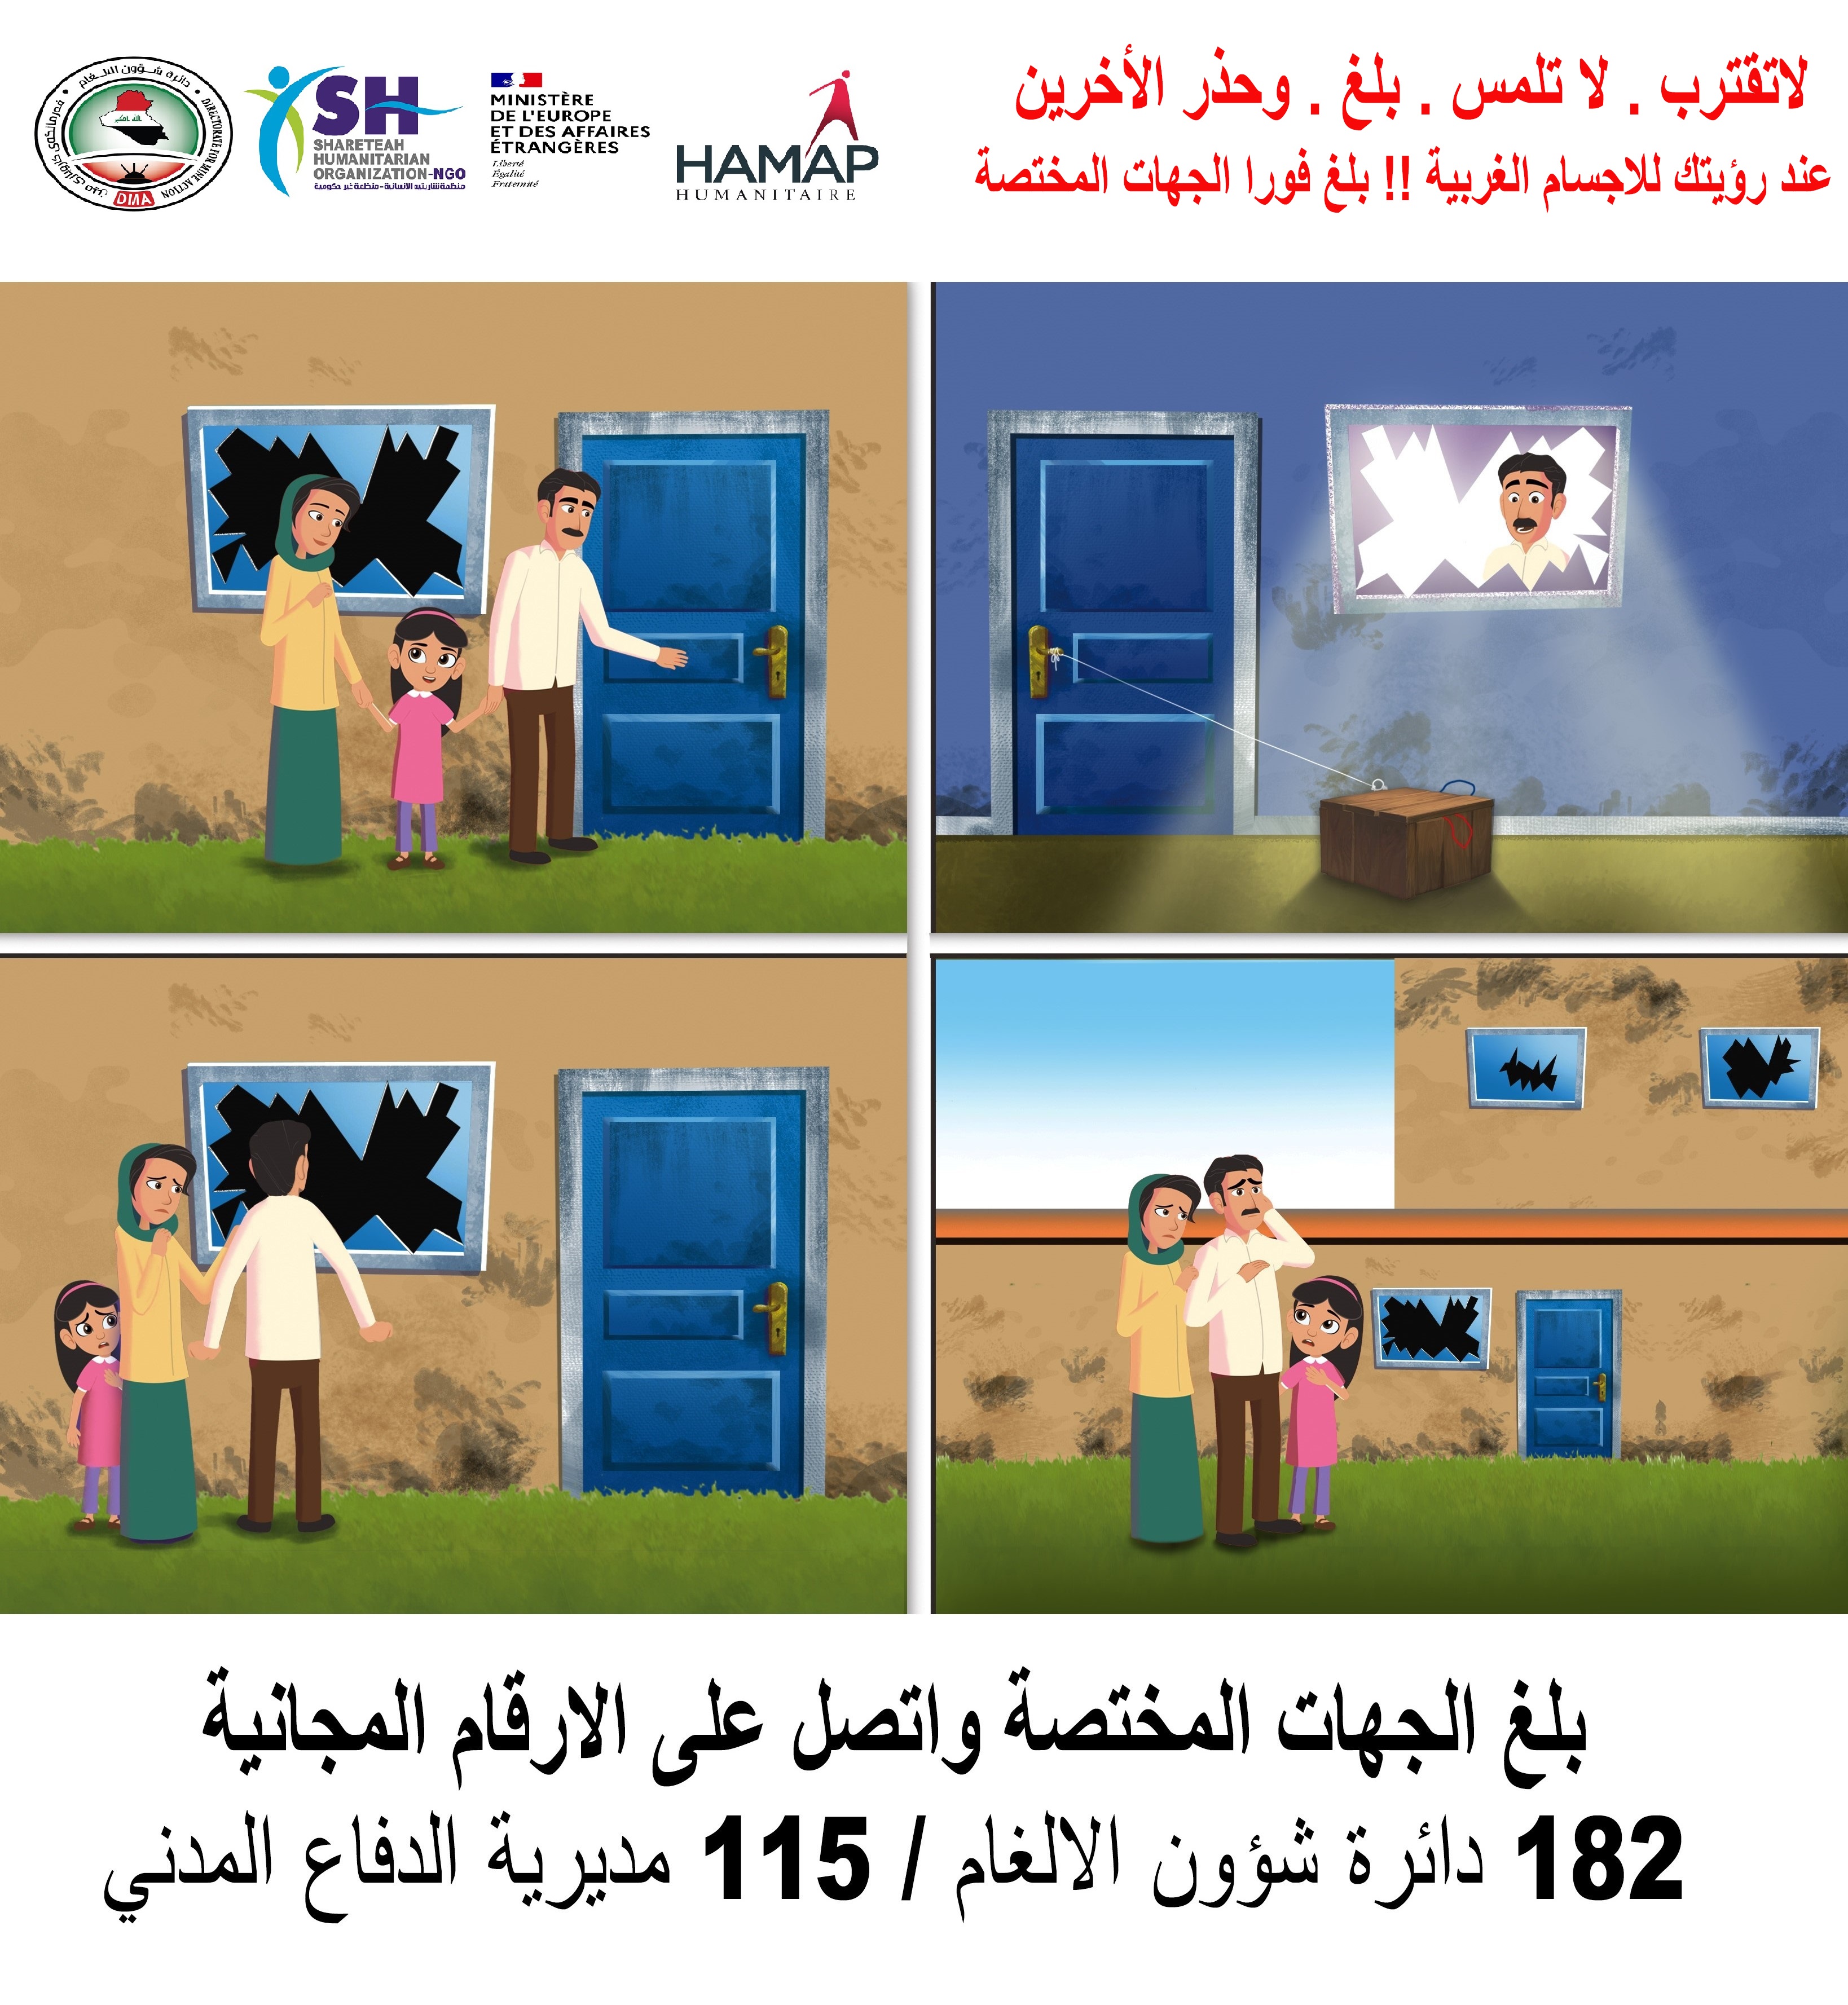 Shareteah Humanitarian Organization SHO Explosive Ordnance Risk Education EORE Messages